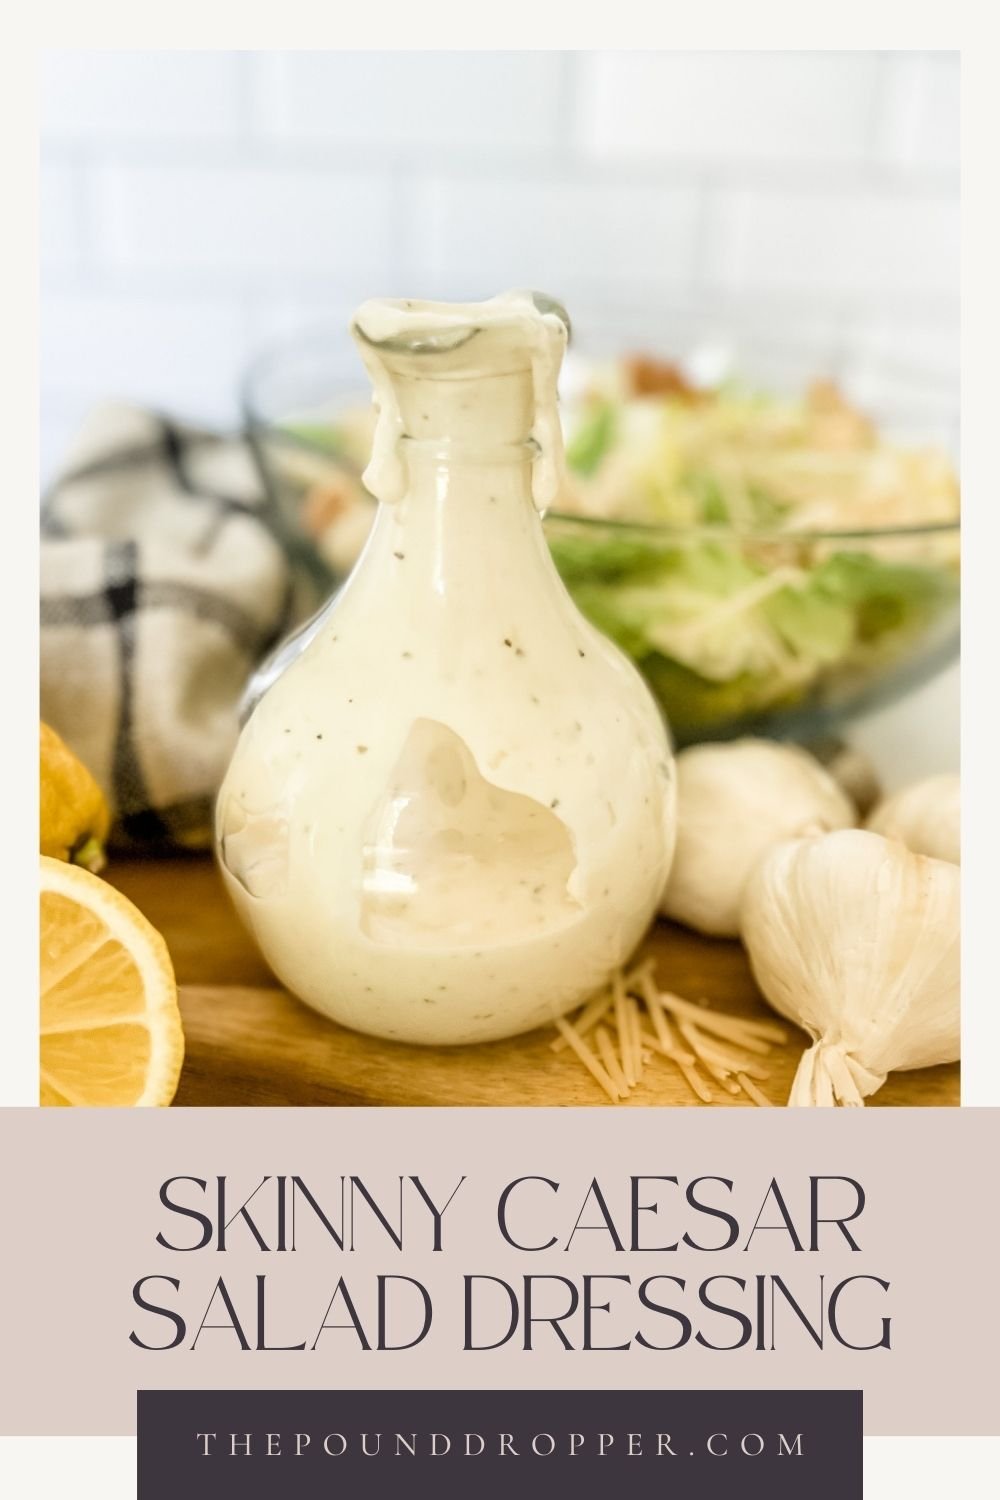 Skinny Caesar Salad Dressing via @pounddropper